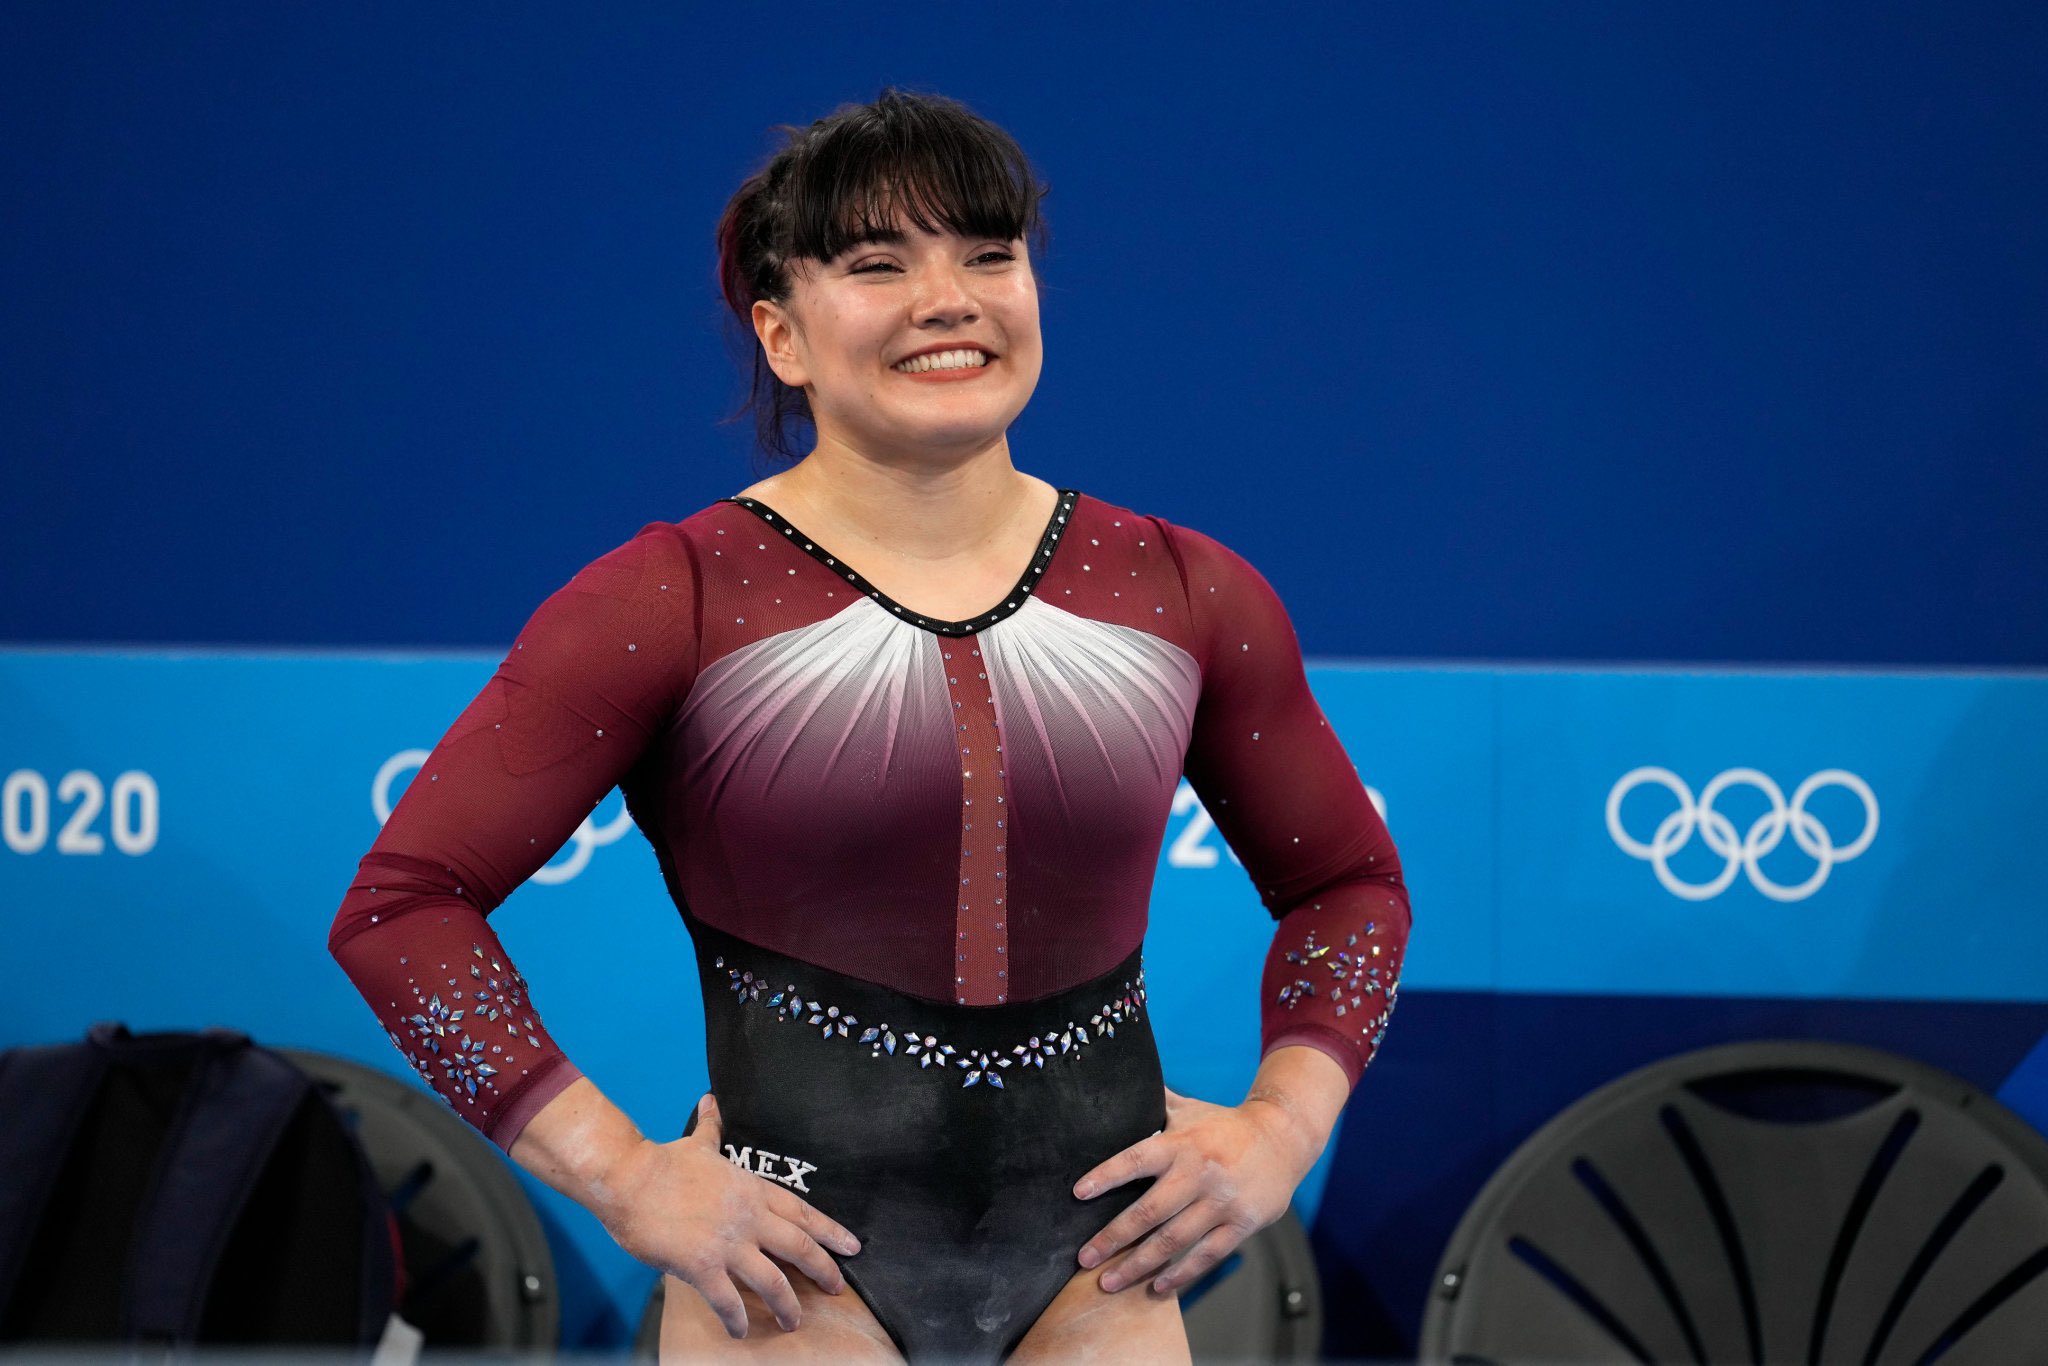 La gimnasta mexicana Alexa Moreno se quedó a 17 centésimas de lograr el bronce